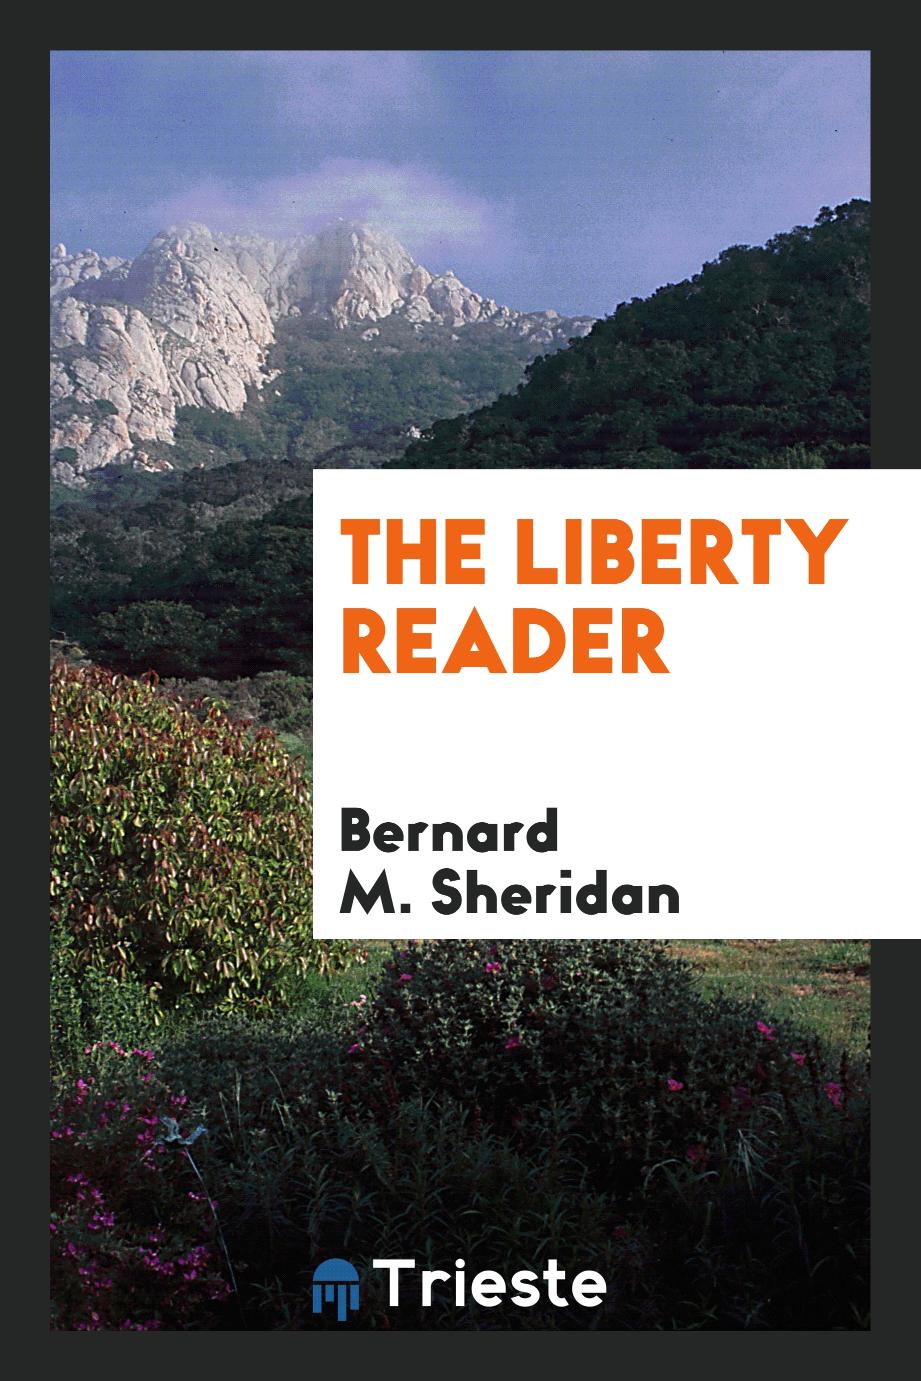 The Liberty reader